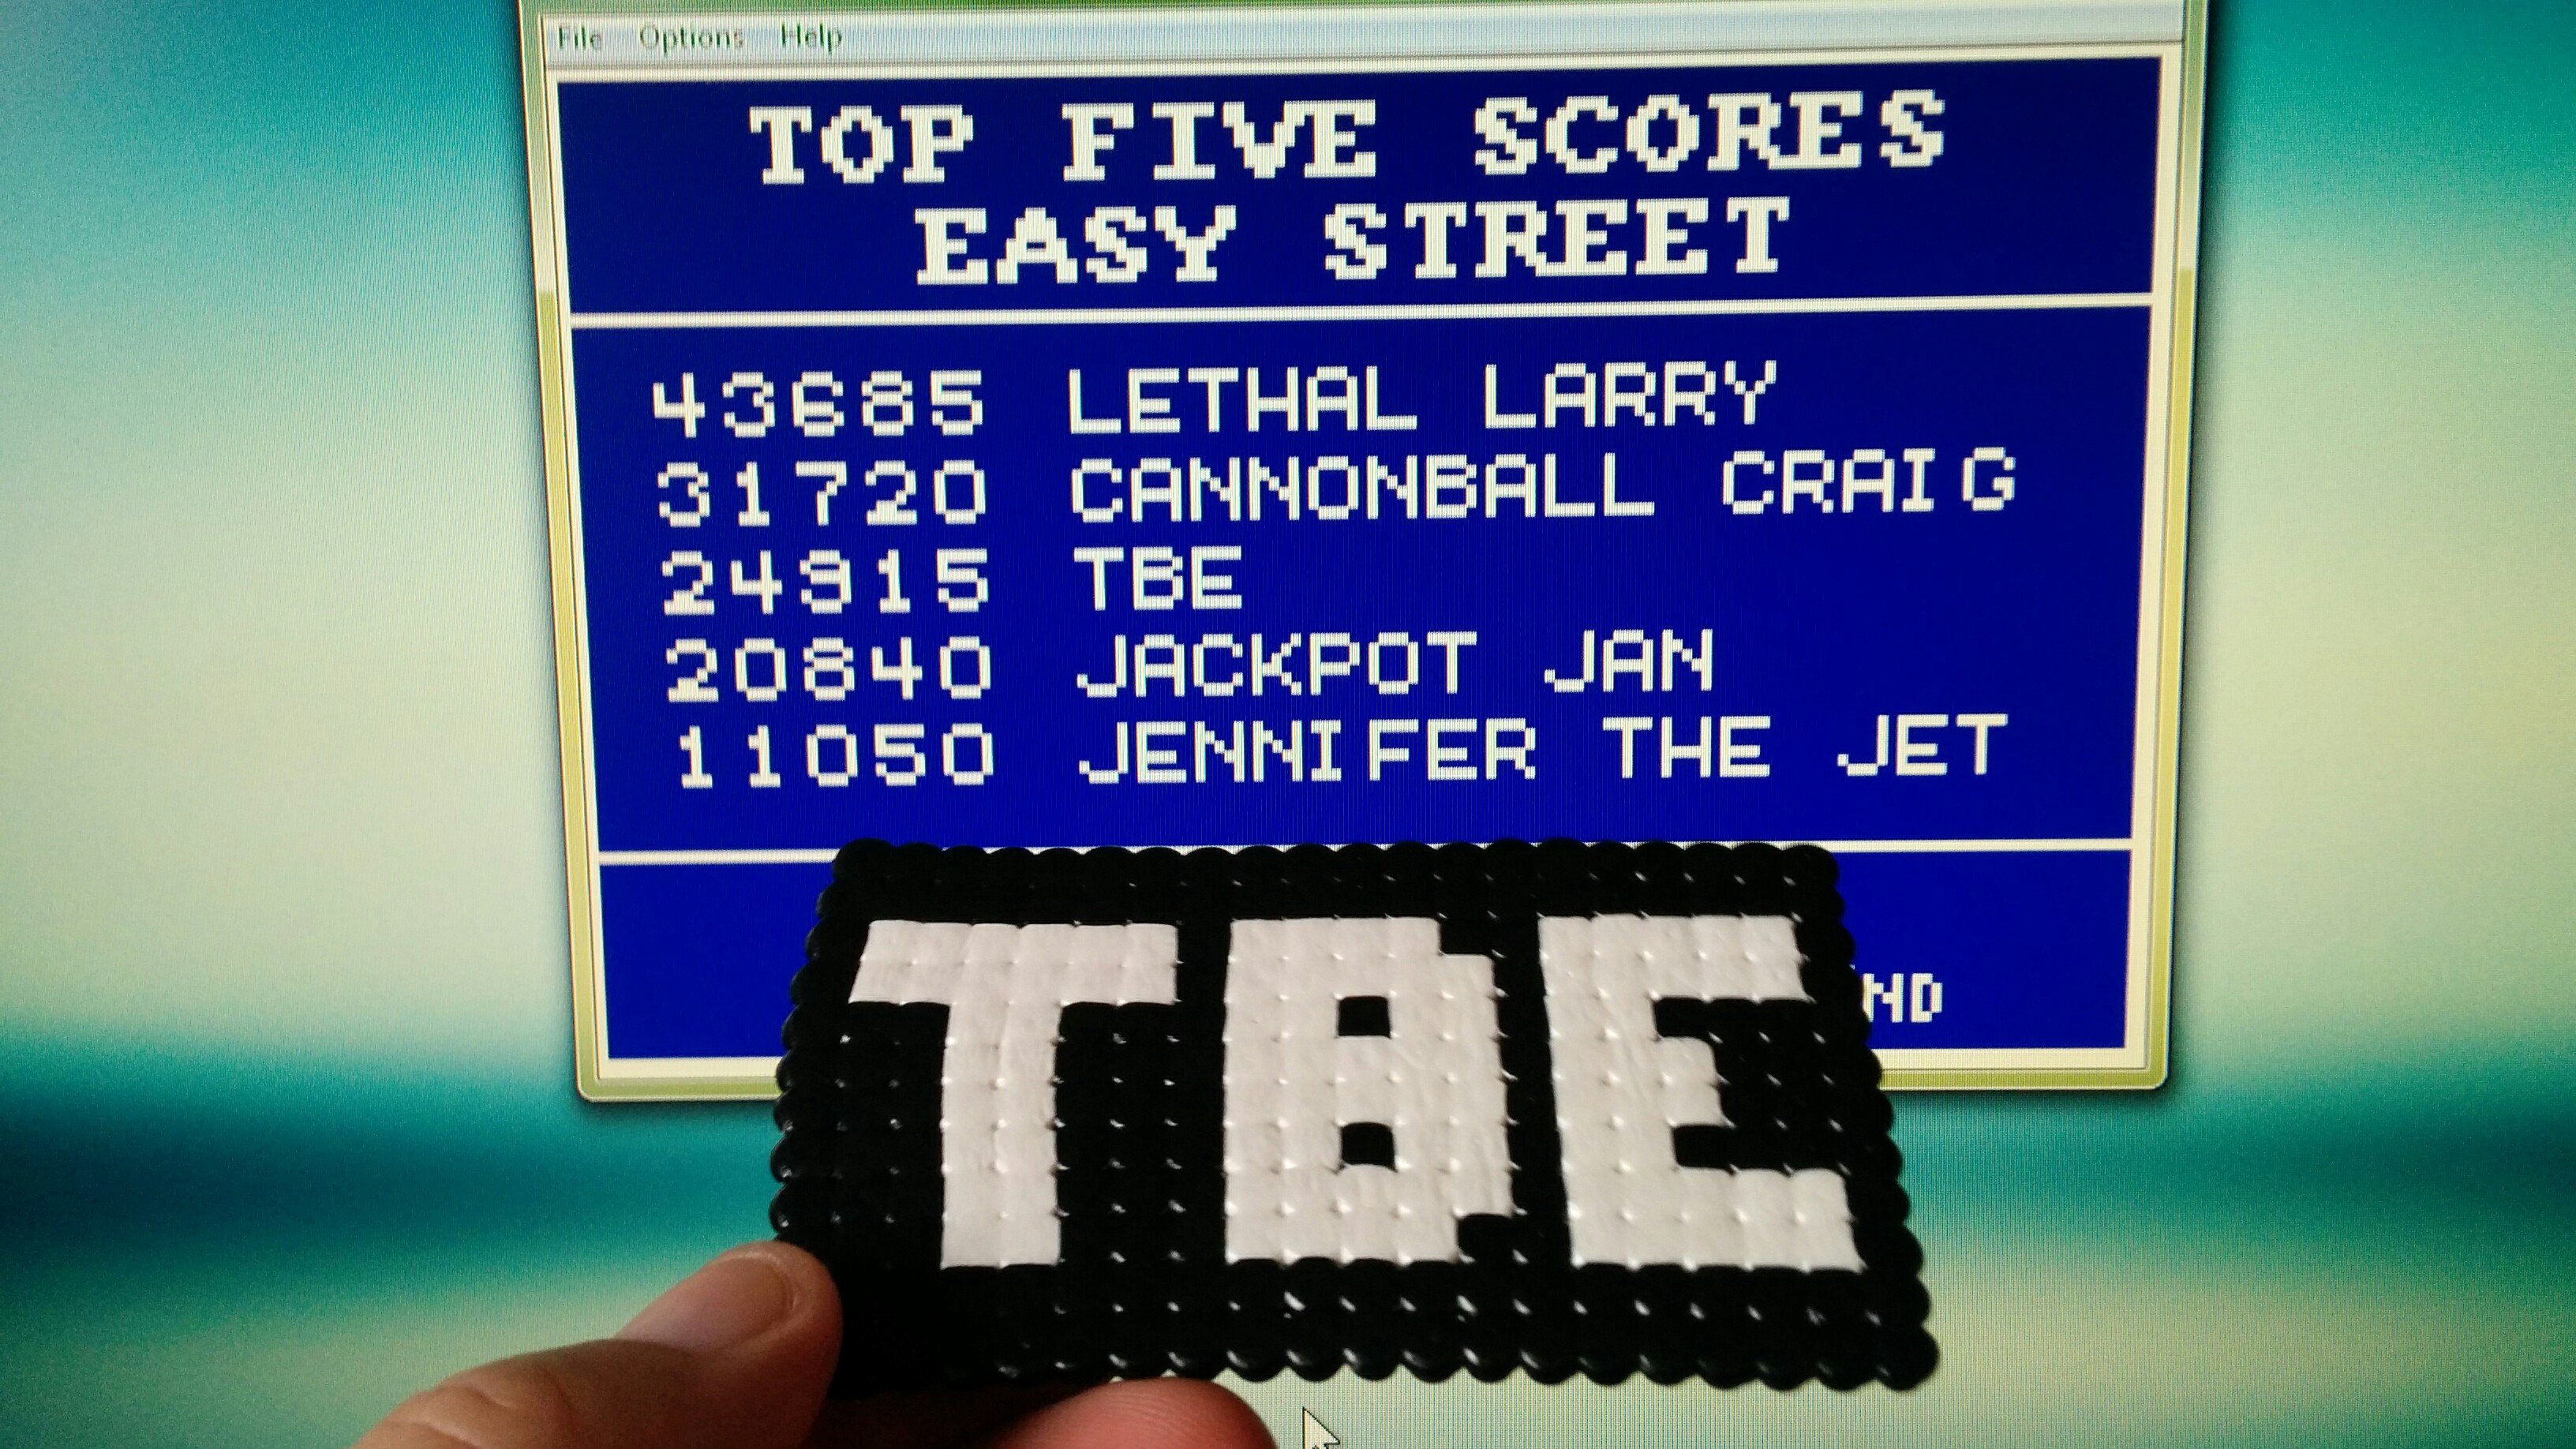 Sixx: Paperboy: Easy Street (Atari Lynx Emulated) 24,915 points on 2014-10-09 08:13:27